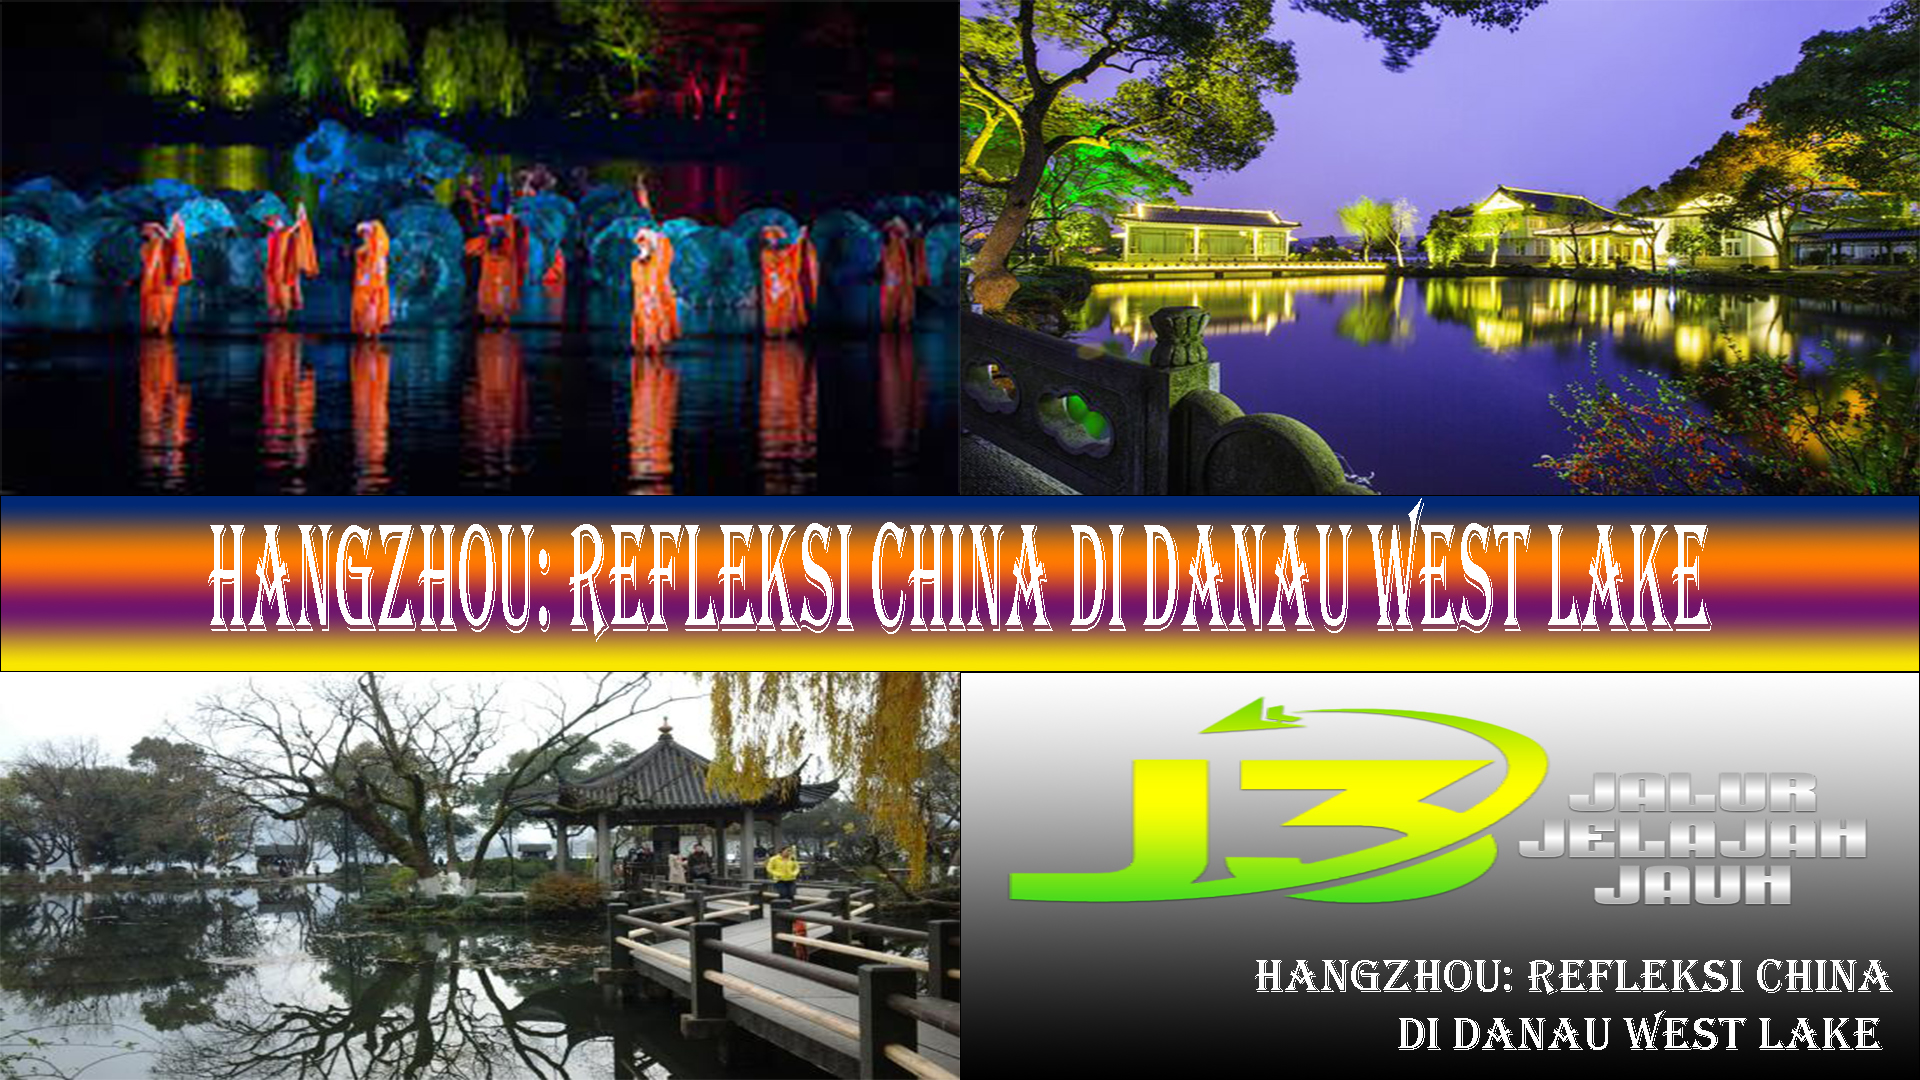 Hangzhou: Refleksi China di Danau West Lake